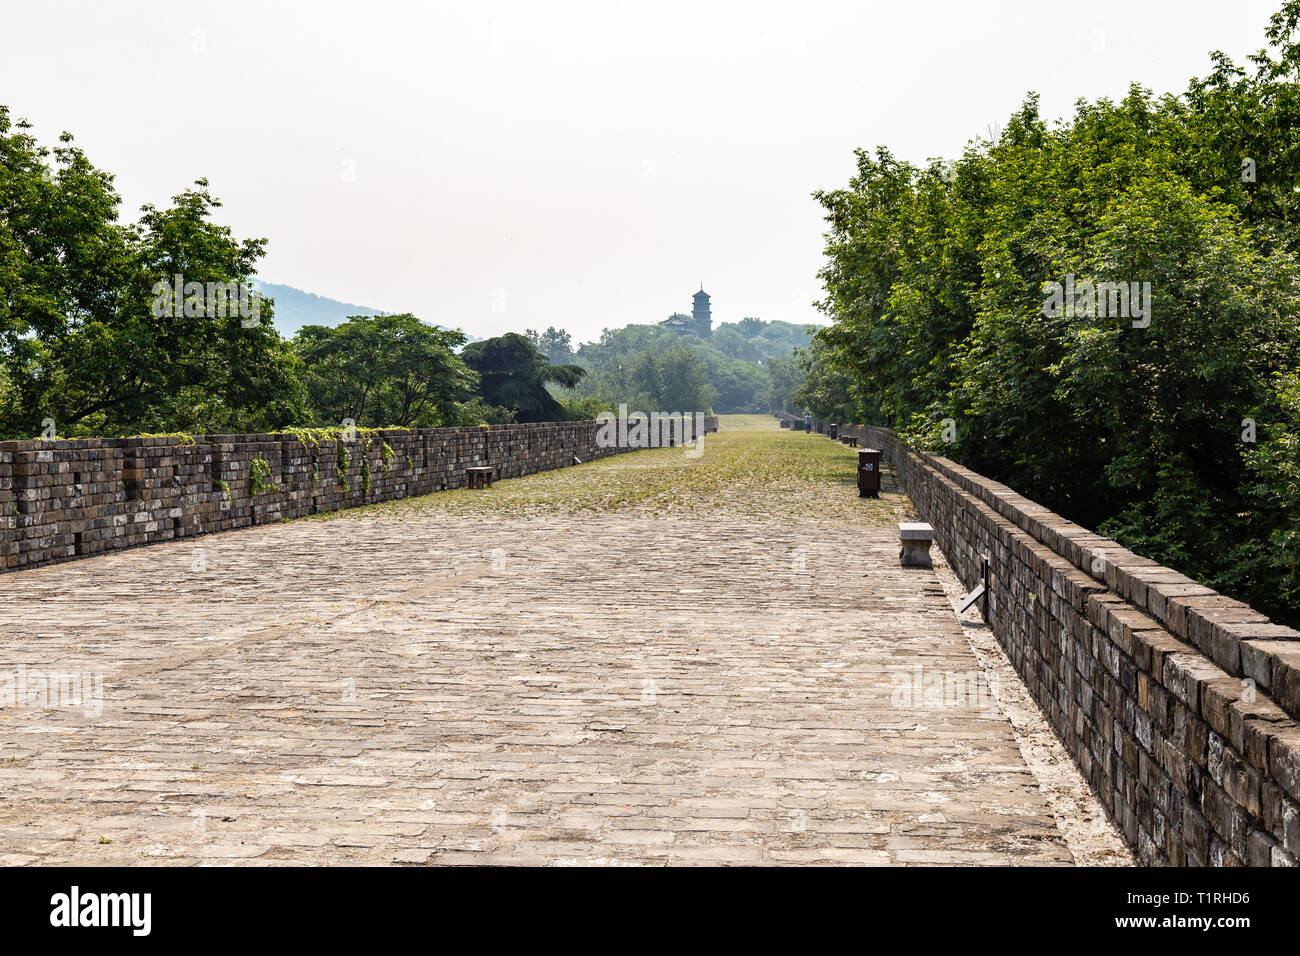 May 2017 - Nanjing, Jiangsu, China - a section of the old Ming Dynasty city walls near Jiming temple. Zijin mountain is visible far away. Nanjing has  Stock Photo